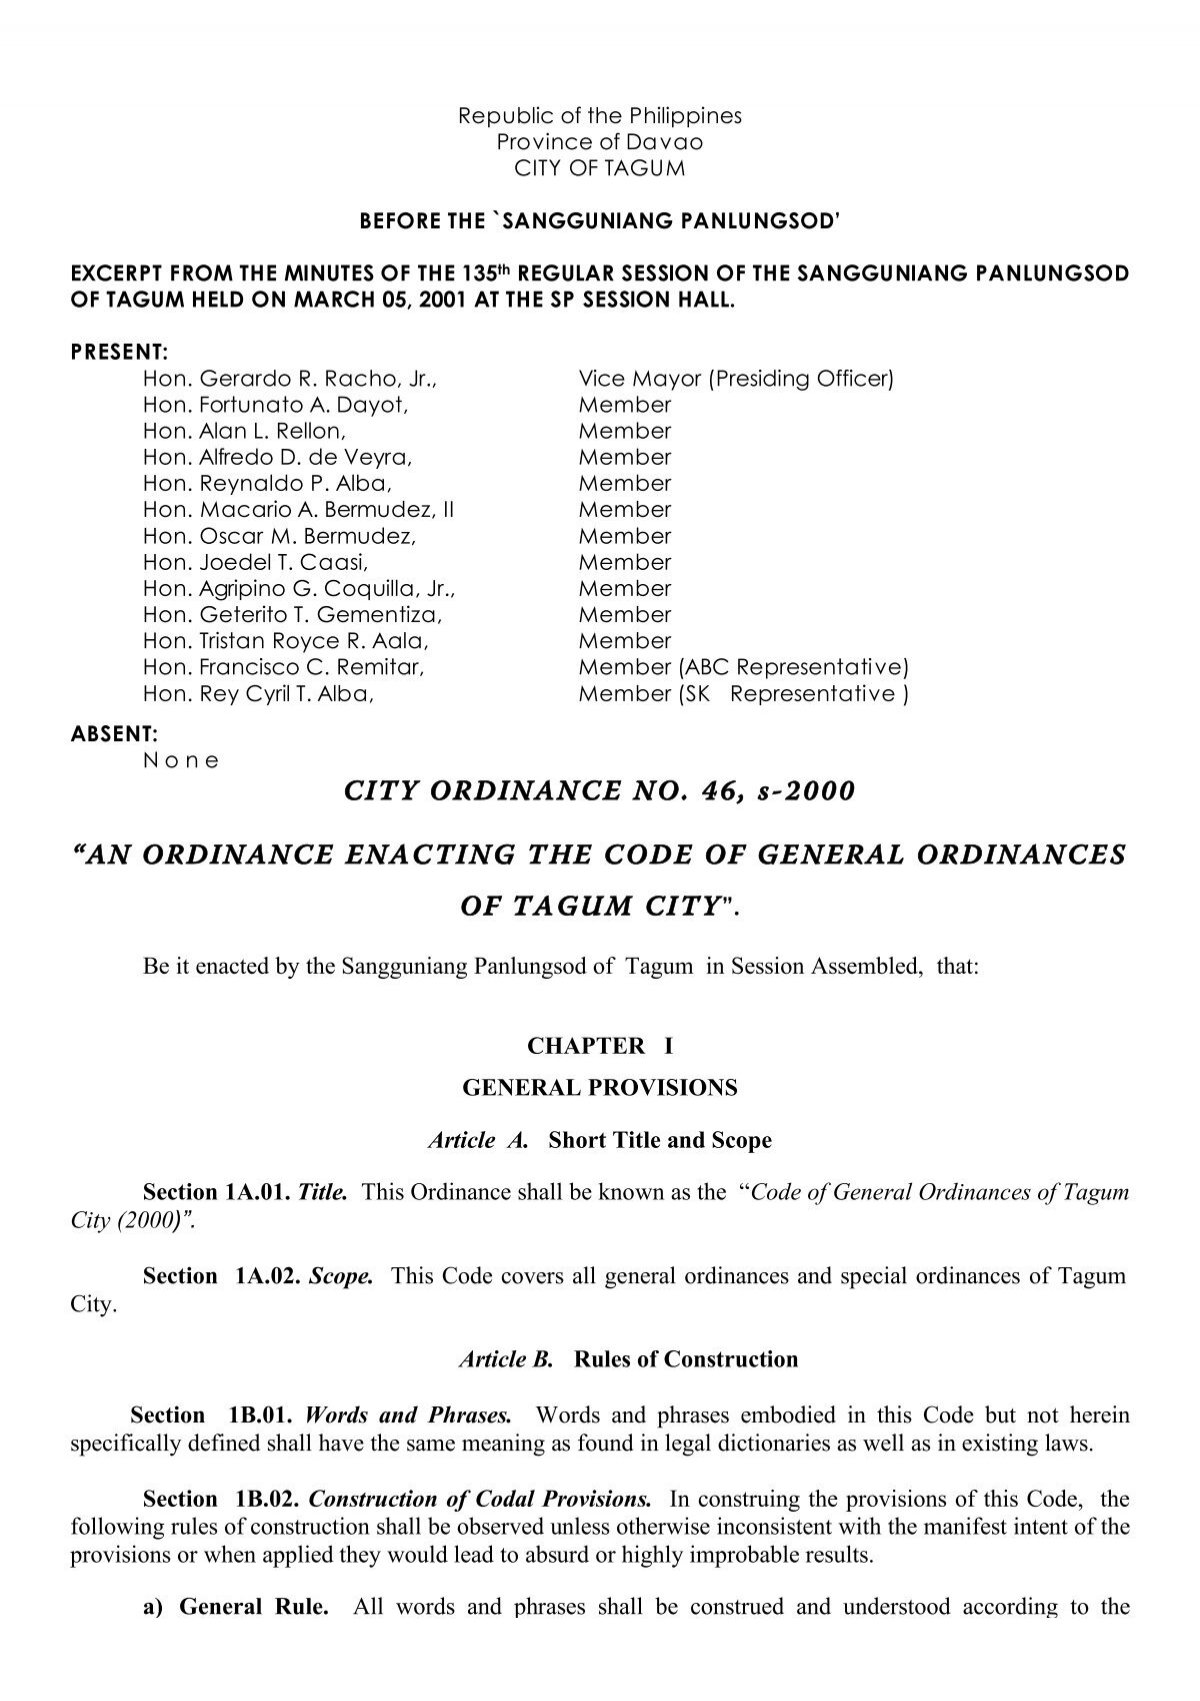 city-ordinance-no-46-s-2000-an-ordinance-tagum-city